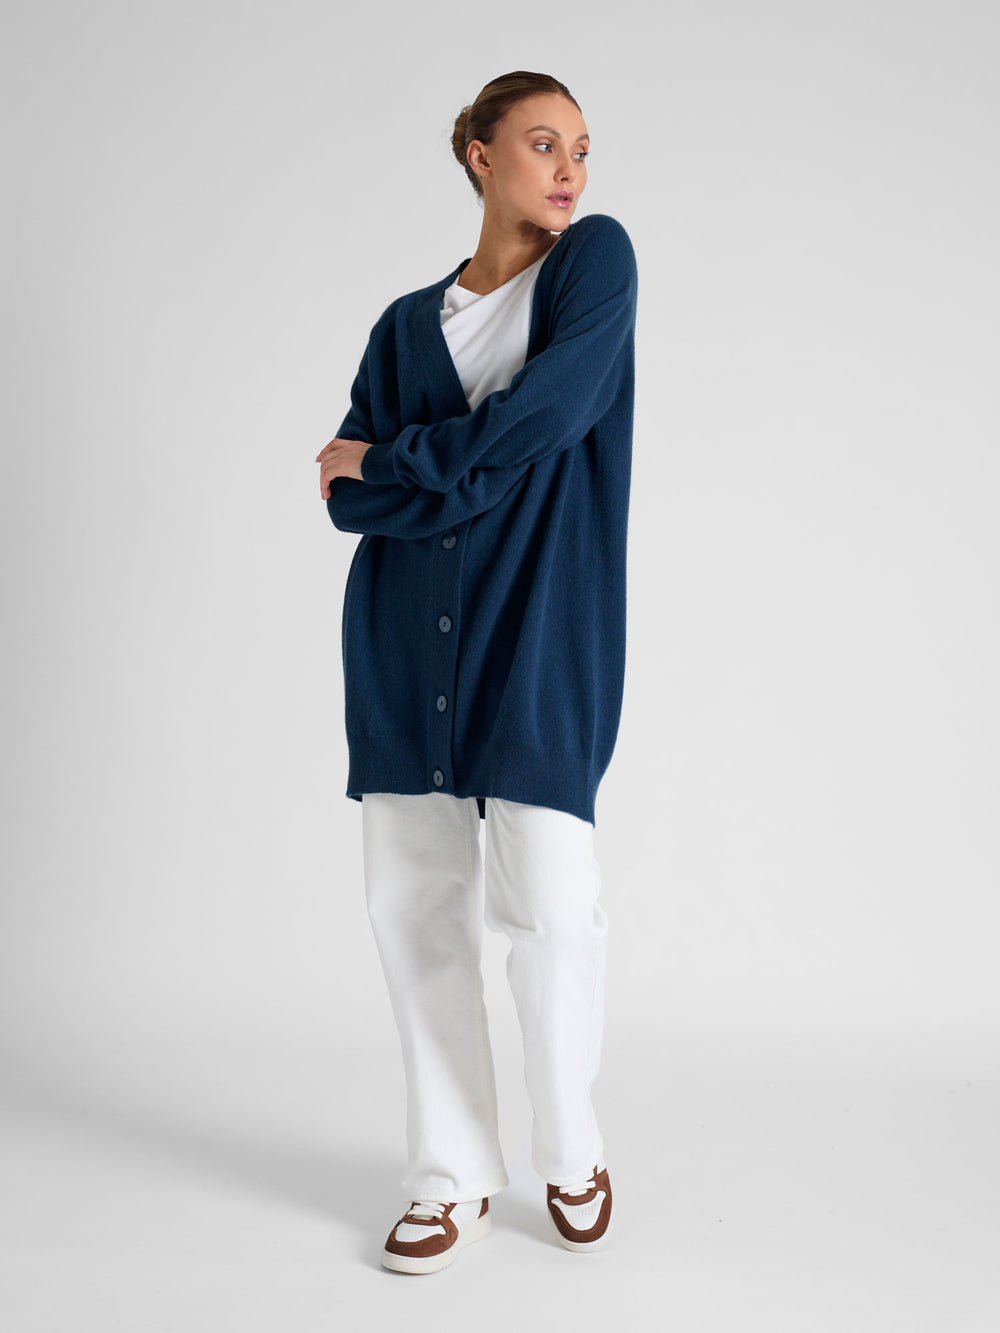 Cashmere cardigan "Lykke" 100% pure cashmere. Scandinavian design. Color: Mountain Blue.